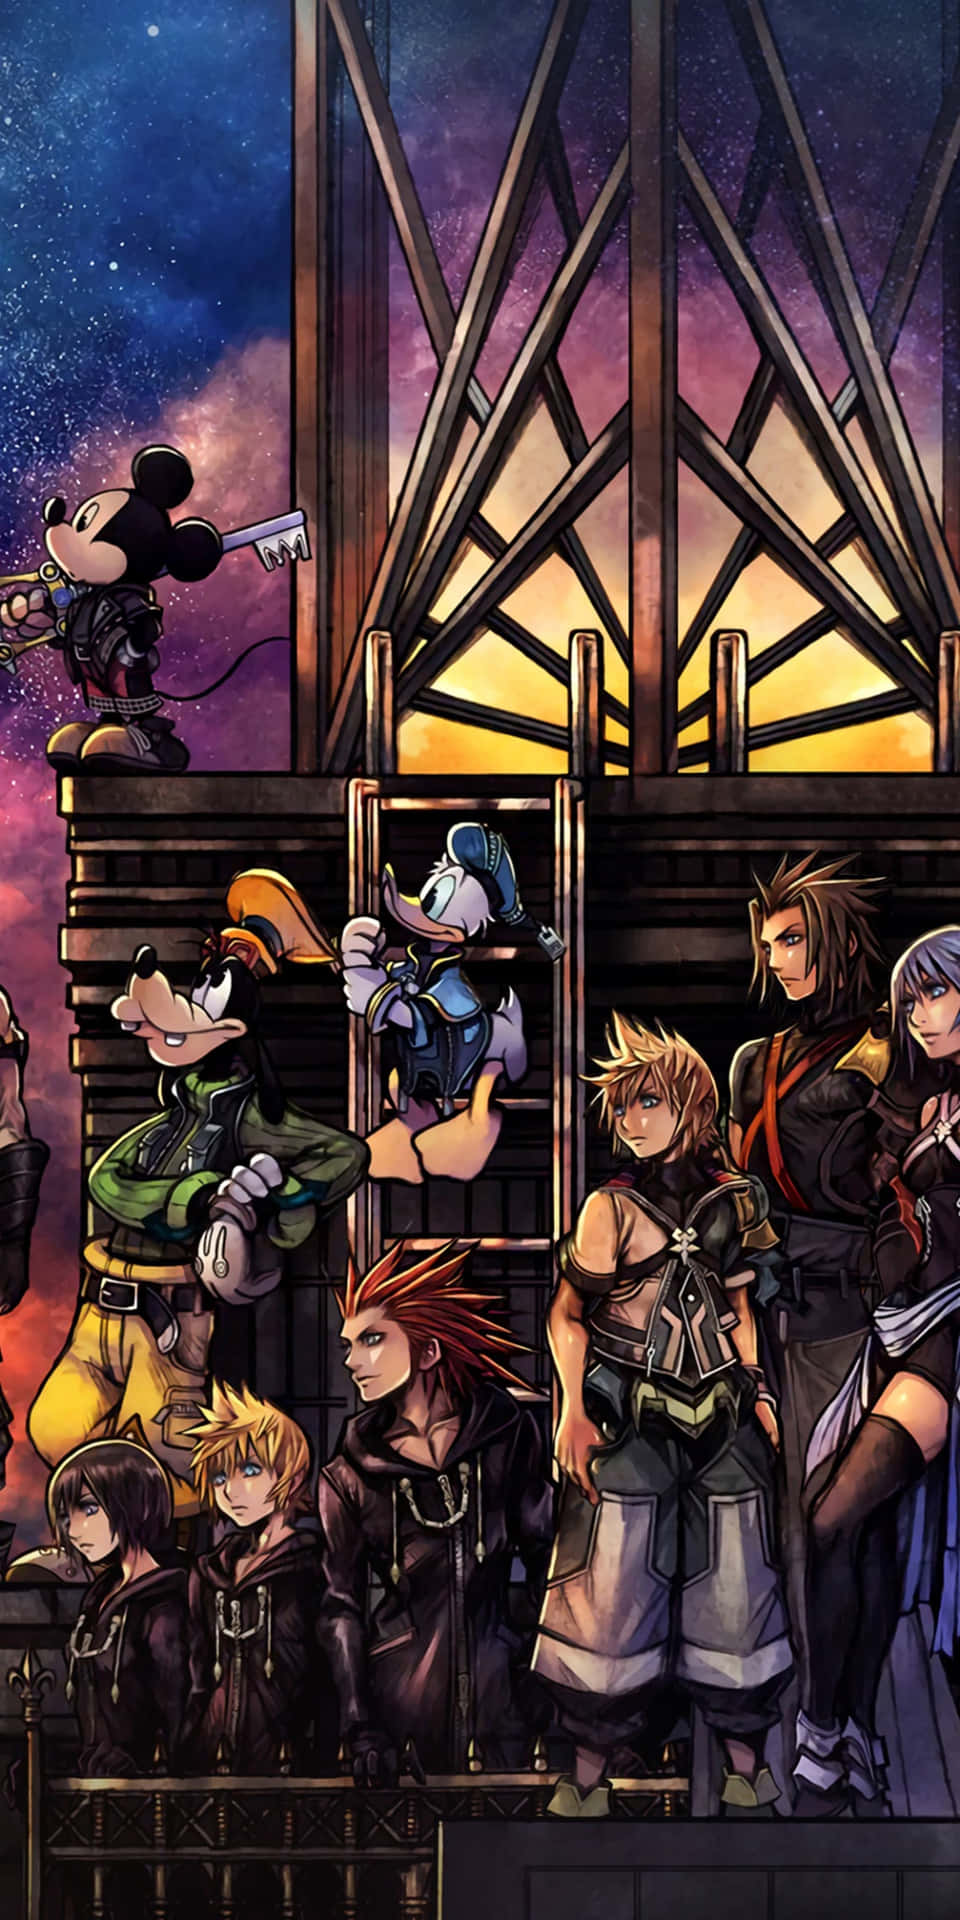 A Fantastical Journey Through Different Worlds - Kingdom Hearts Wallpaper